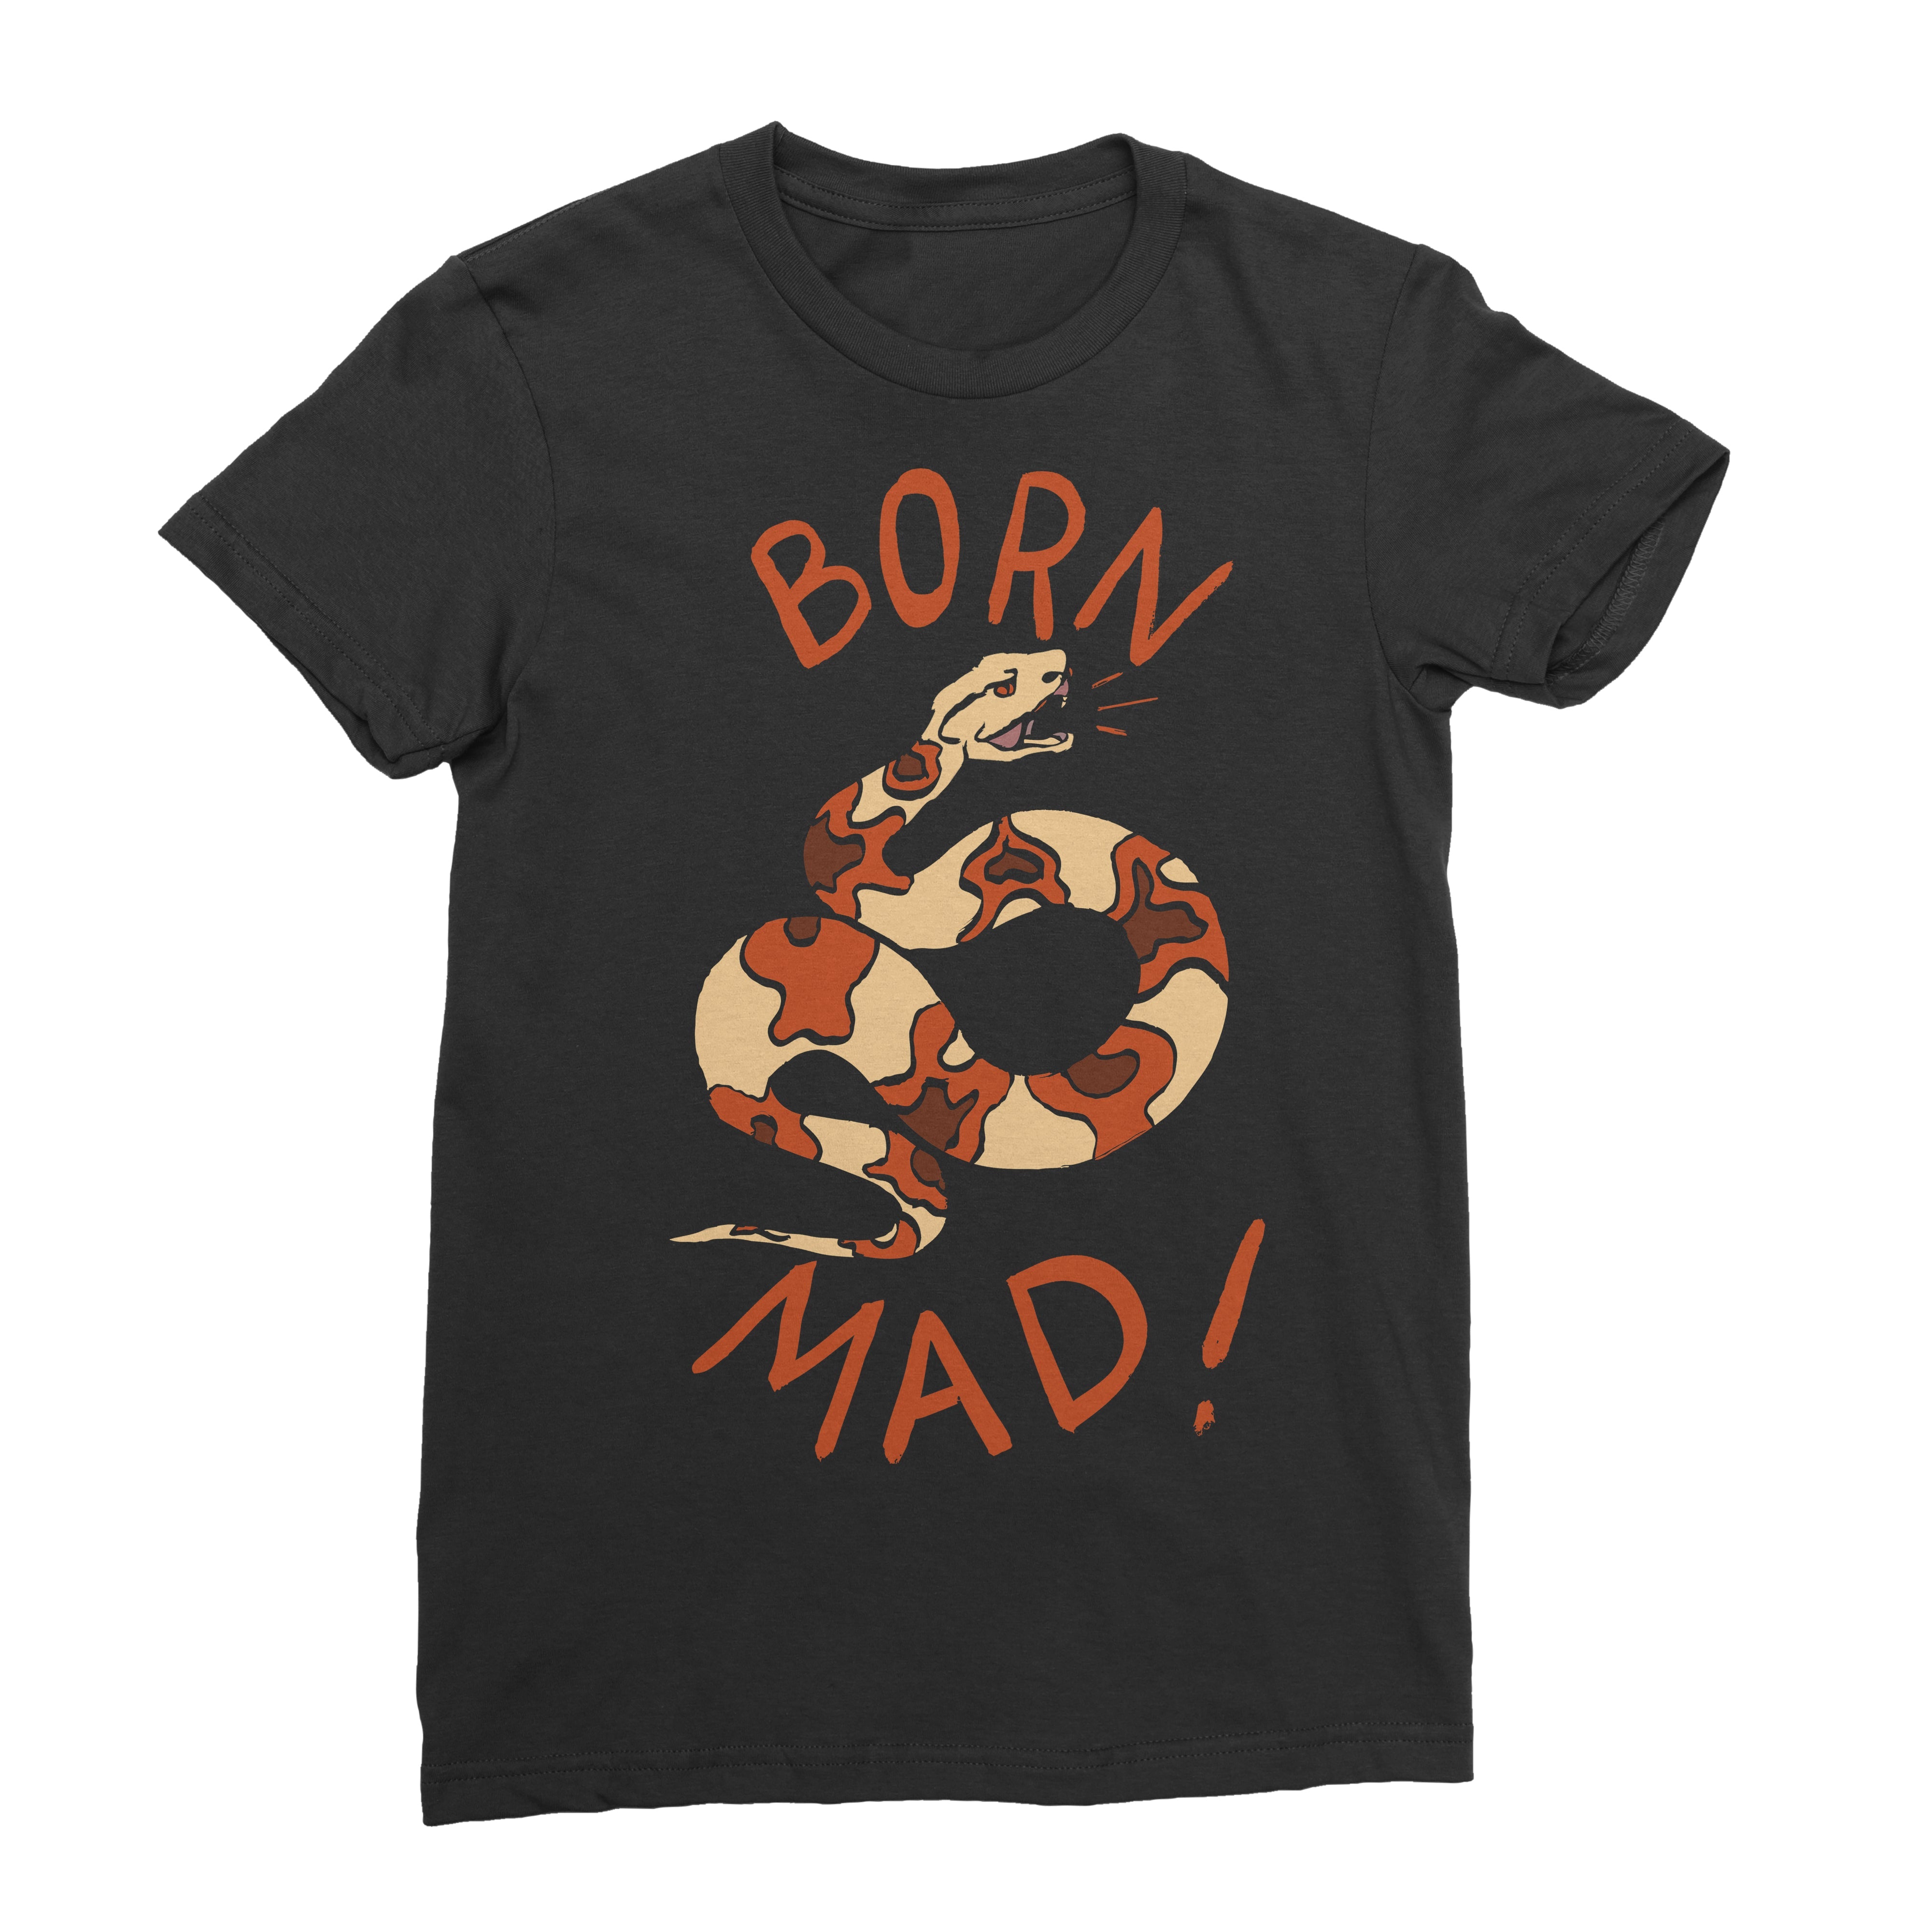 Louisiana Saturday Night T Shirt by Angry Sasquatch Creative